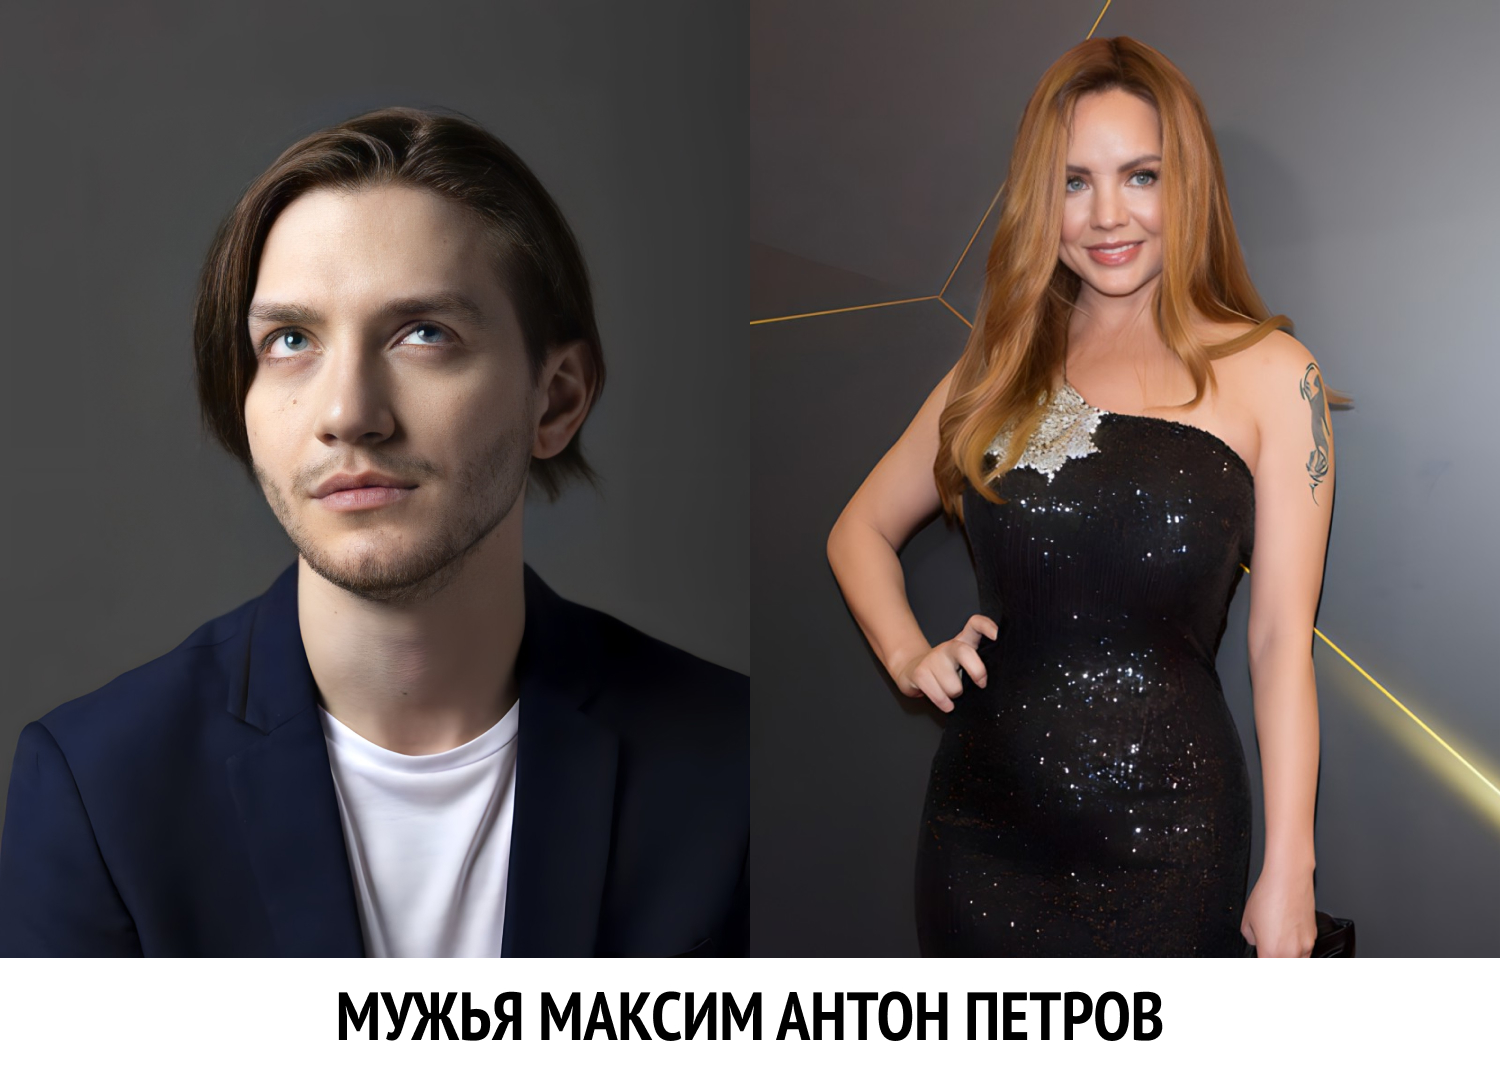 muzhya-Maksim-anton-petrov (8).jpg